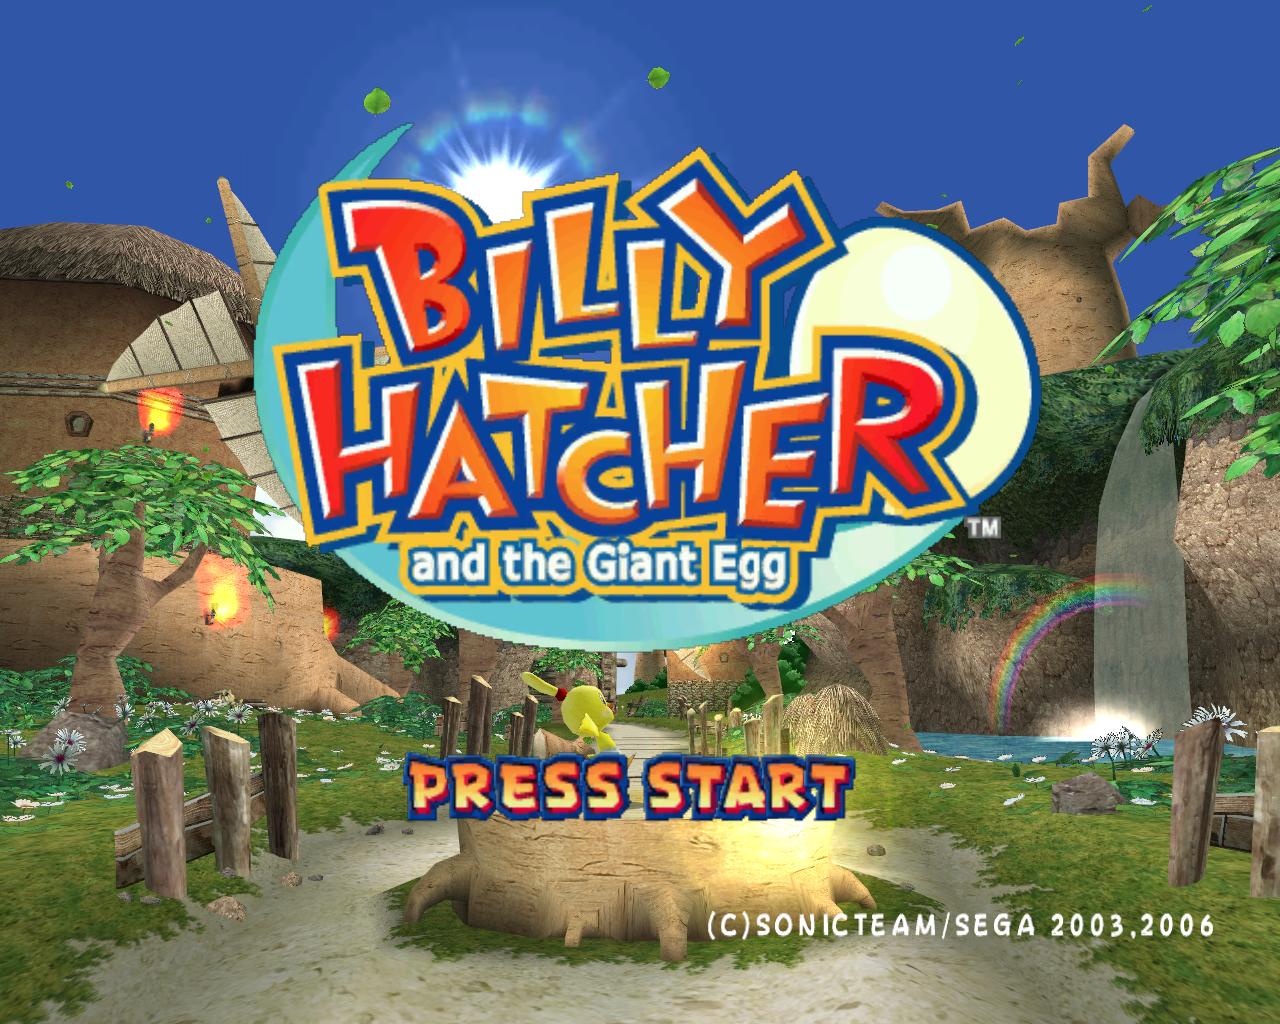 Billy Hatcher and the Giant Egg (https://www.mobygames.com/game/windows/billy-hatcher-and-the-giant-egg/screenshots/gameShotId,212505/)